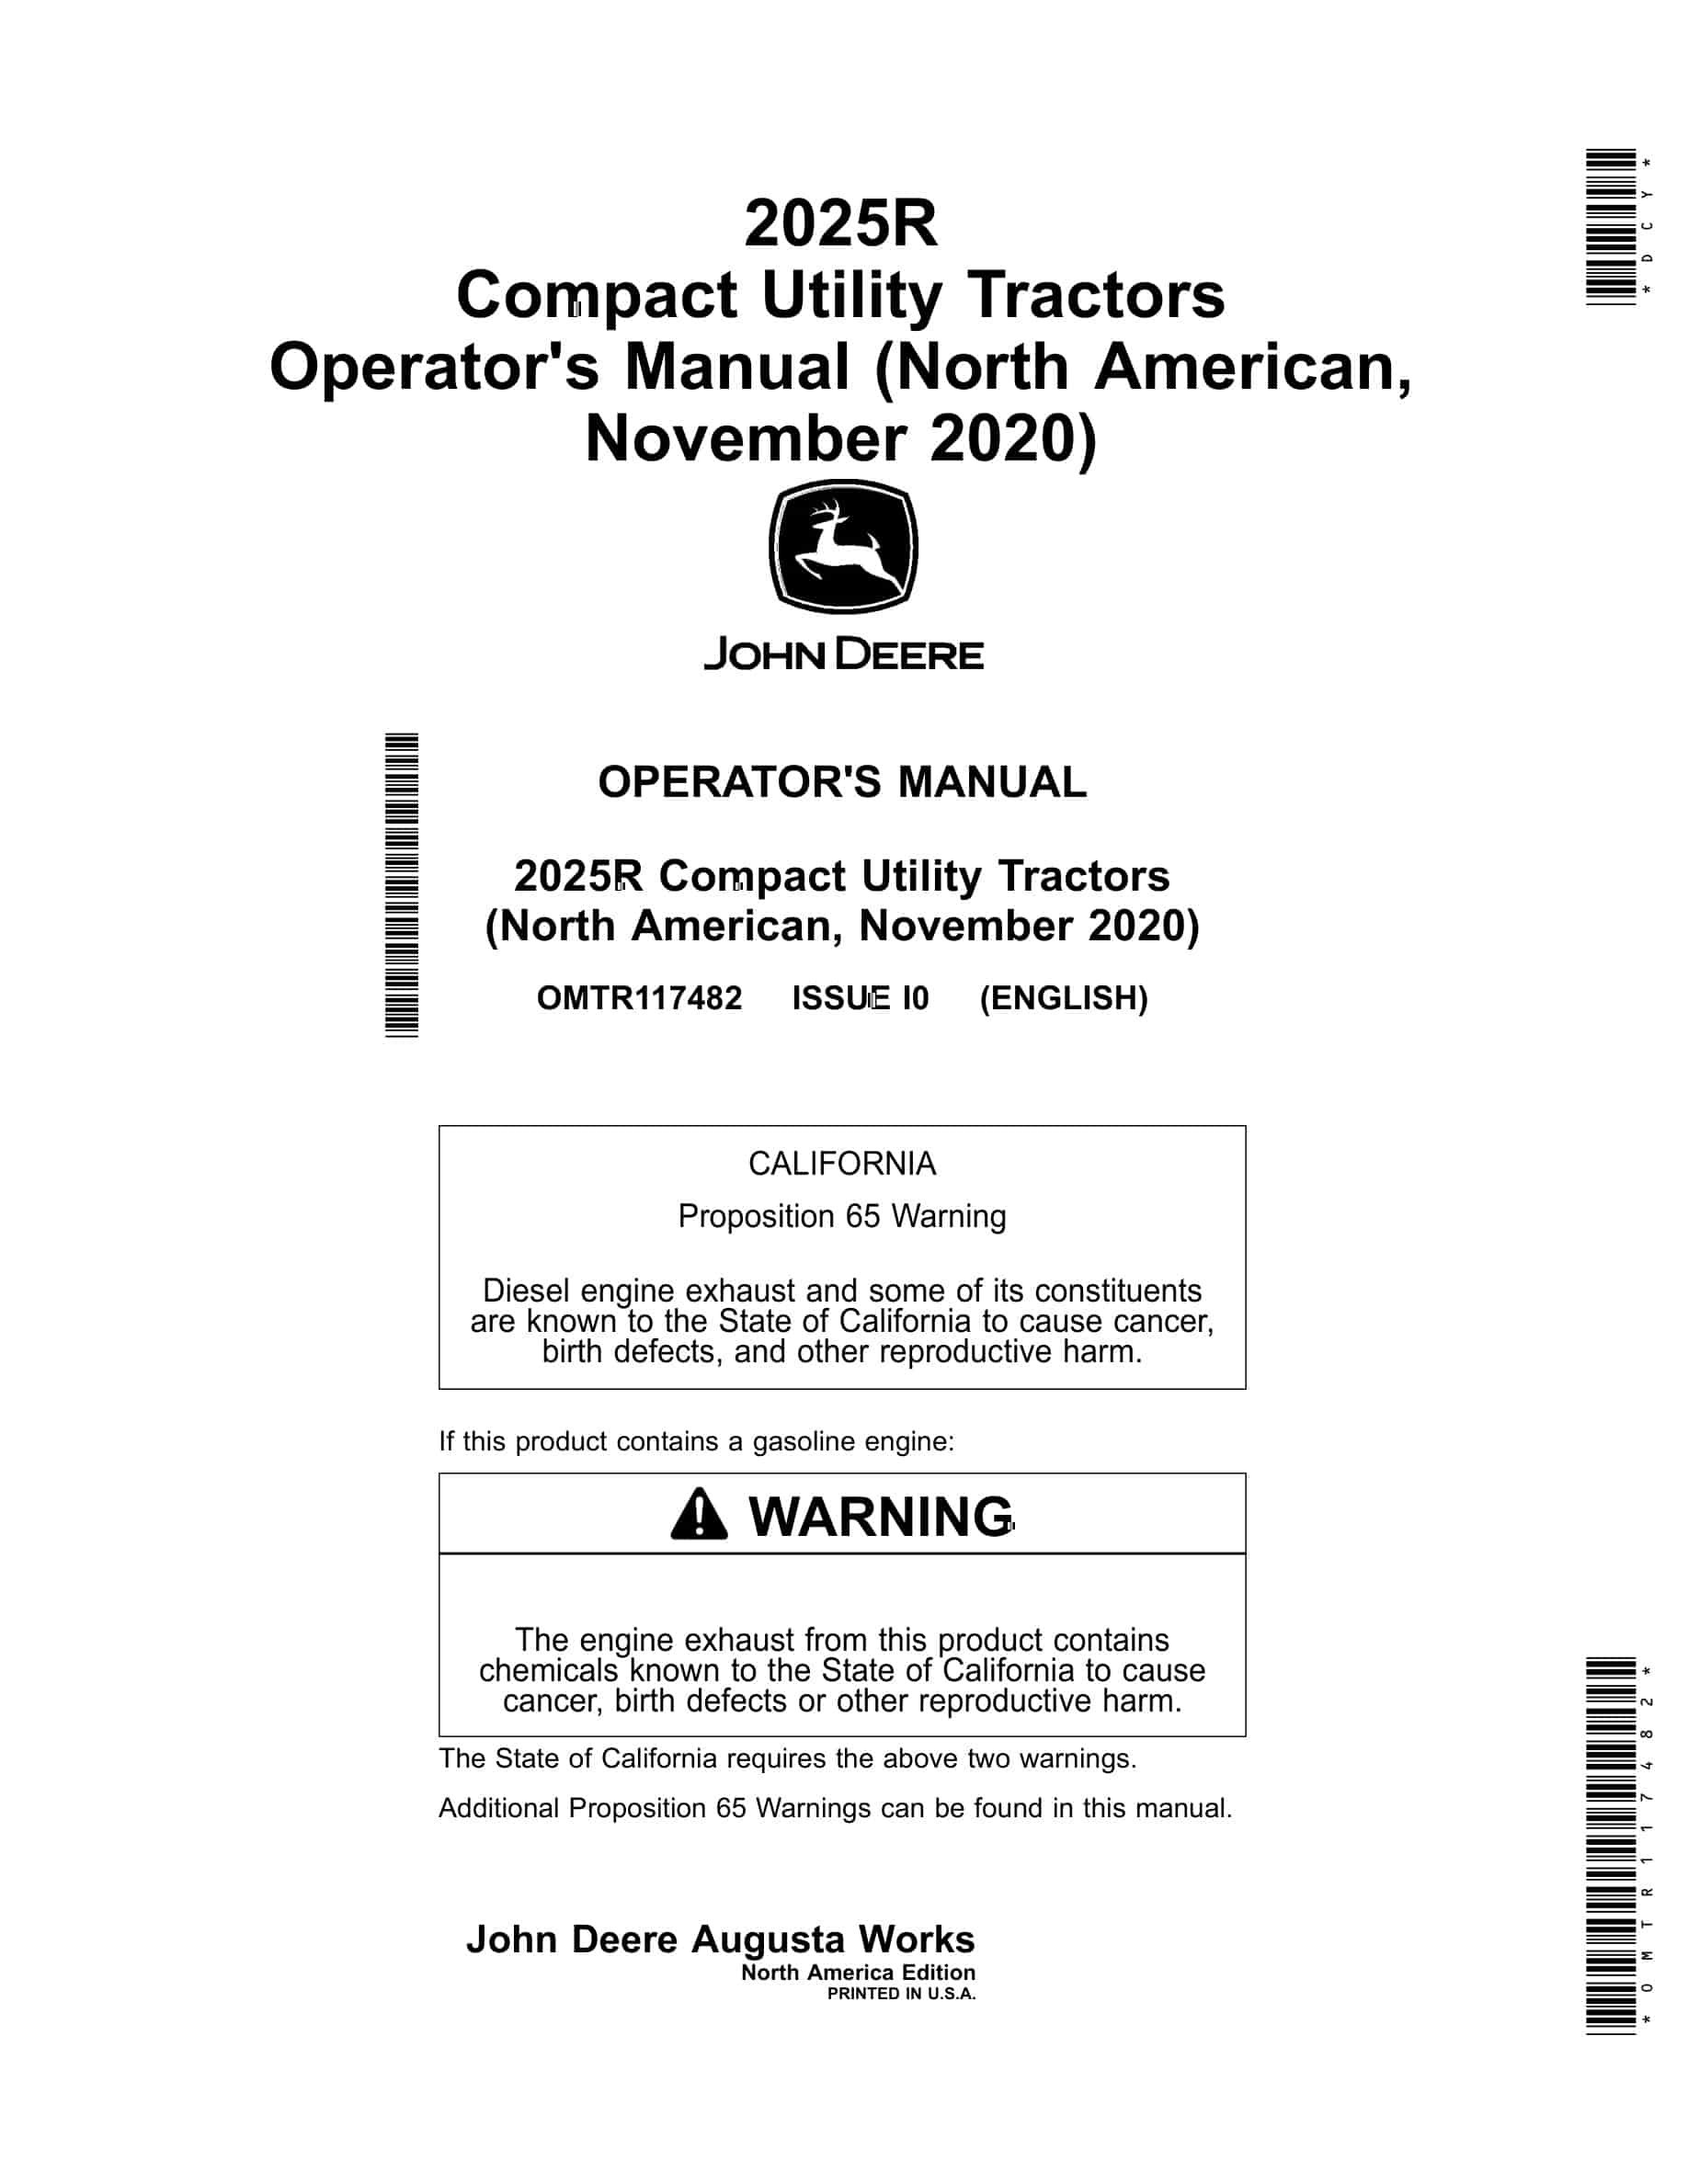 John Deere 2025R Tractor Operator Manual OMTR117482-1